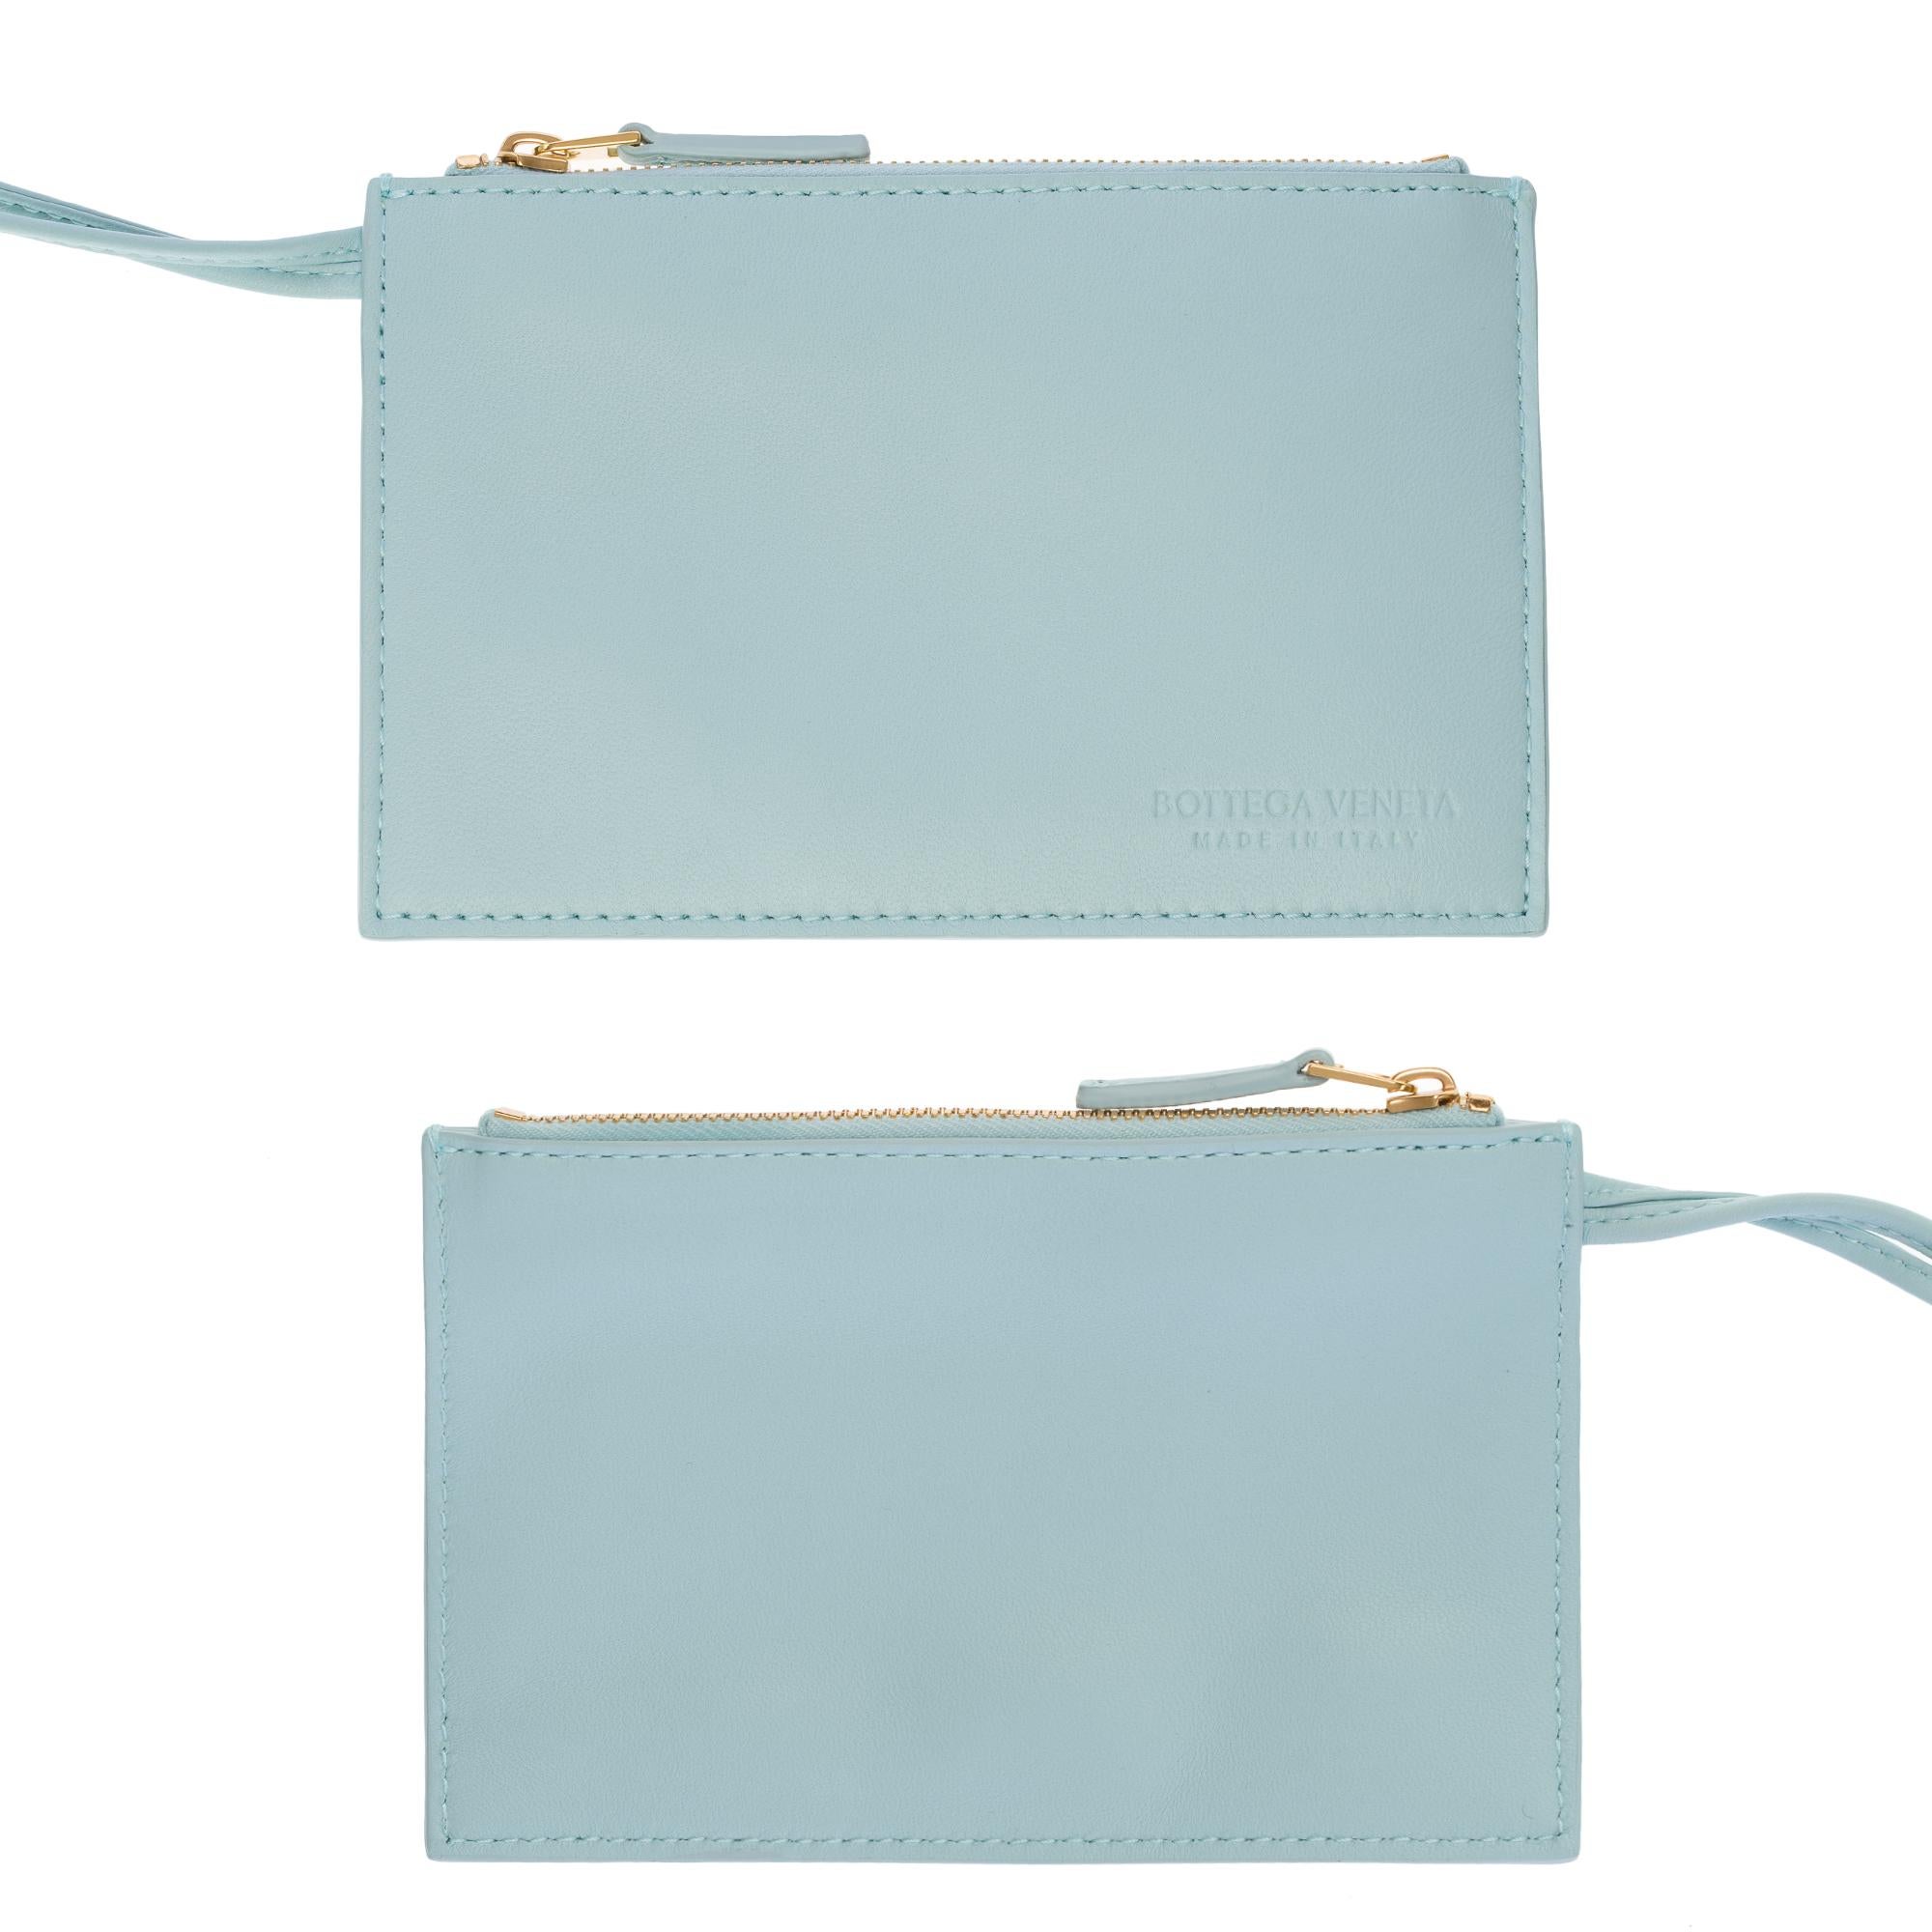 Bottega Veneta Arco 20 handbag strap in blue lambskin , GHW For Sale 10